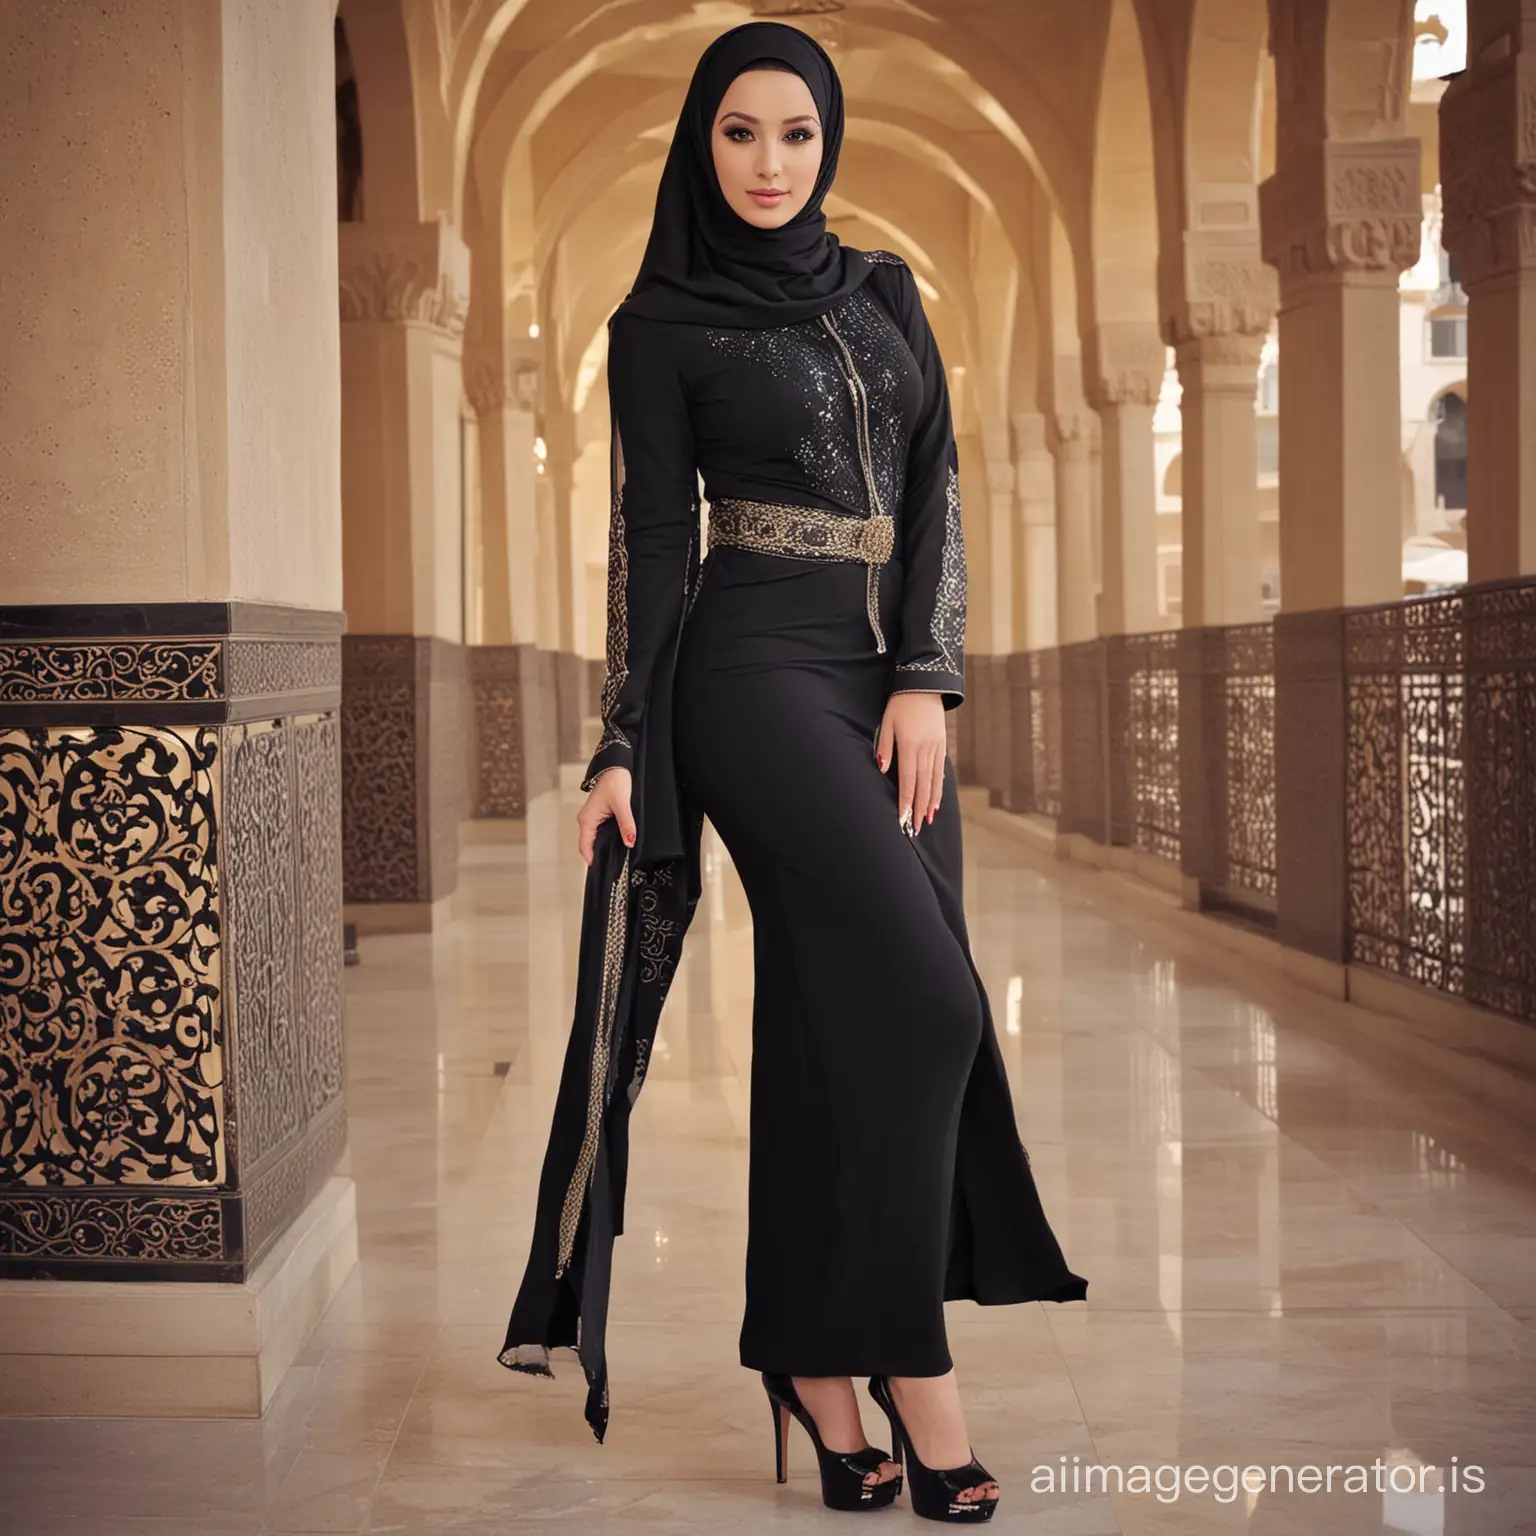 Elegant-Arab-Woman-in-Tight-Abaya-and-Hijab-with-High-Heels